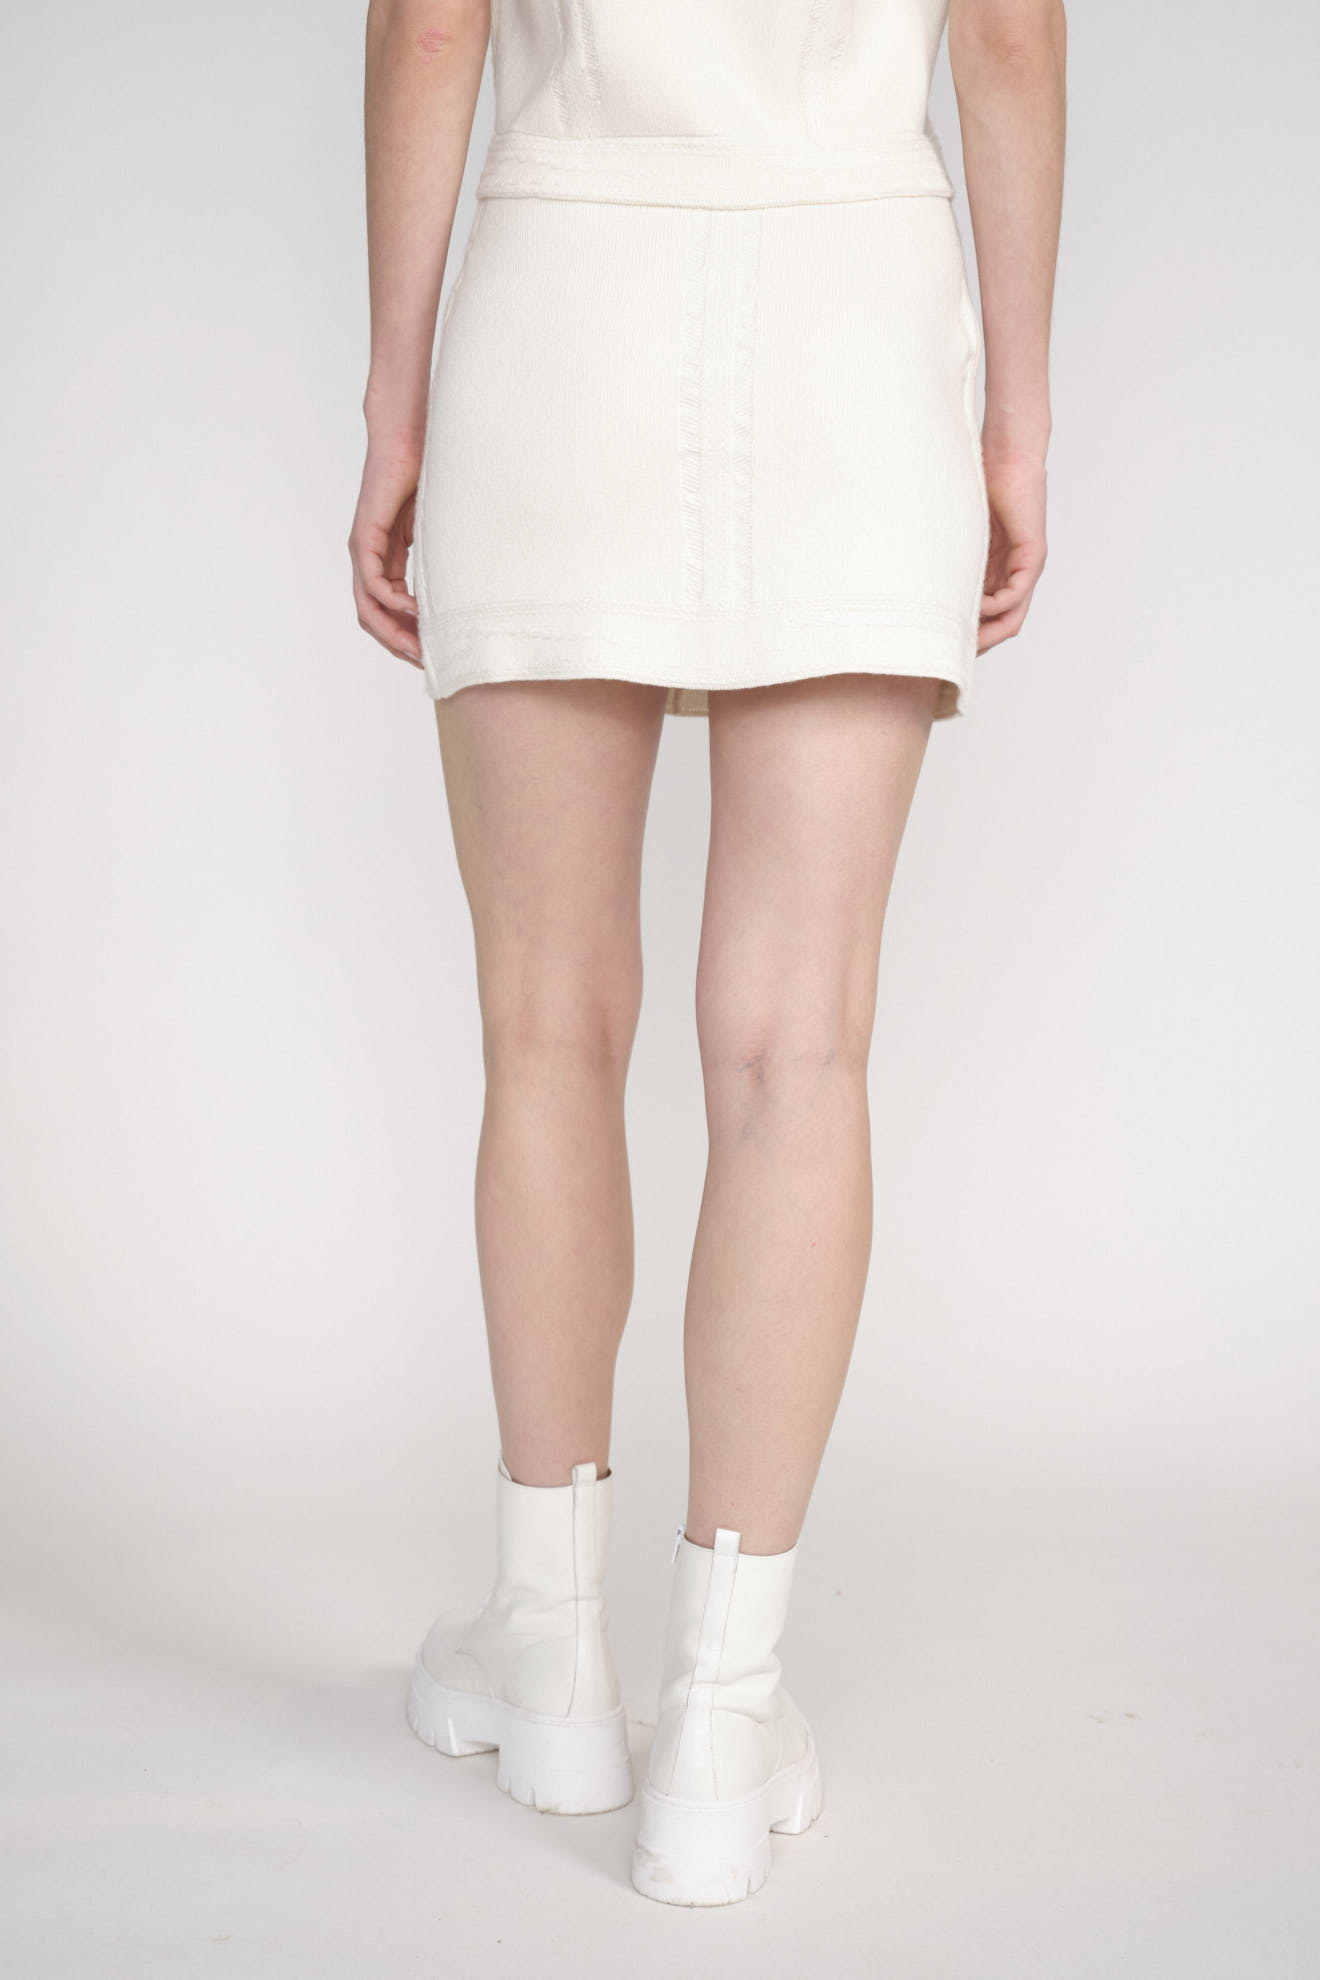 Barrie Denim Cashmere and Cotton Skirt - Minirock aus Cashmere weiss M